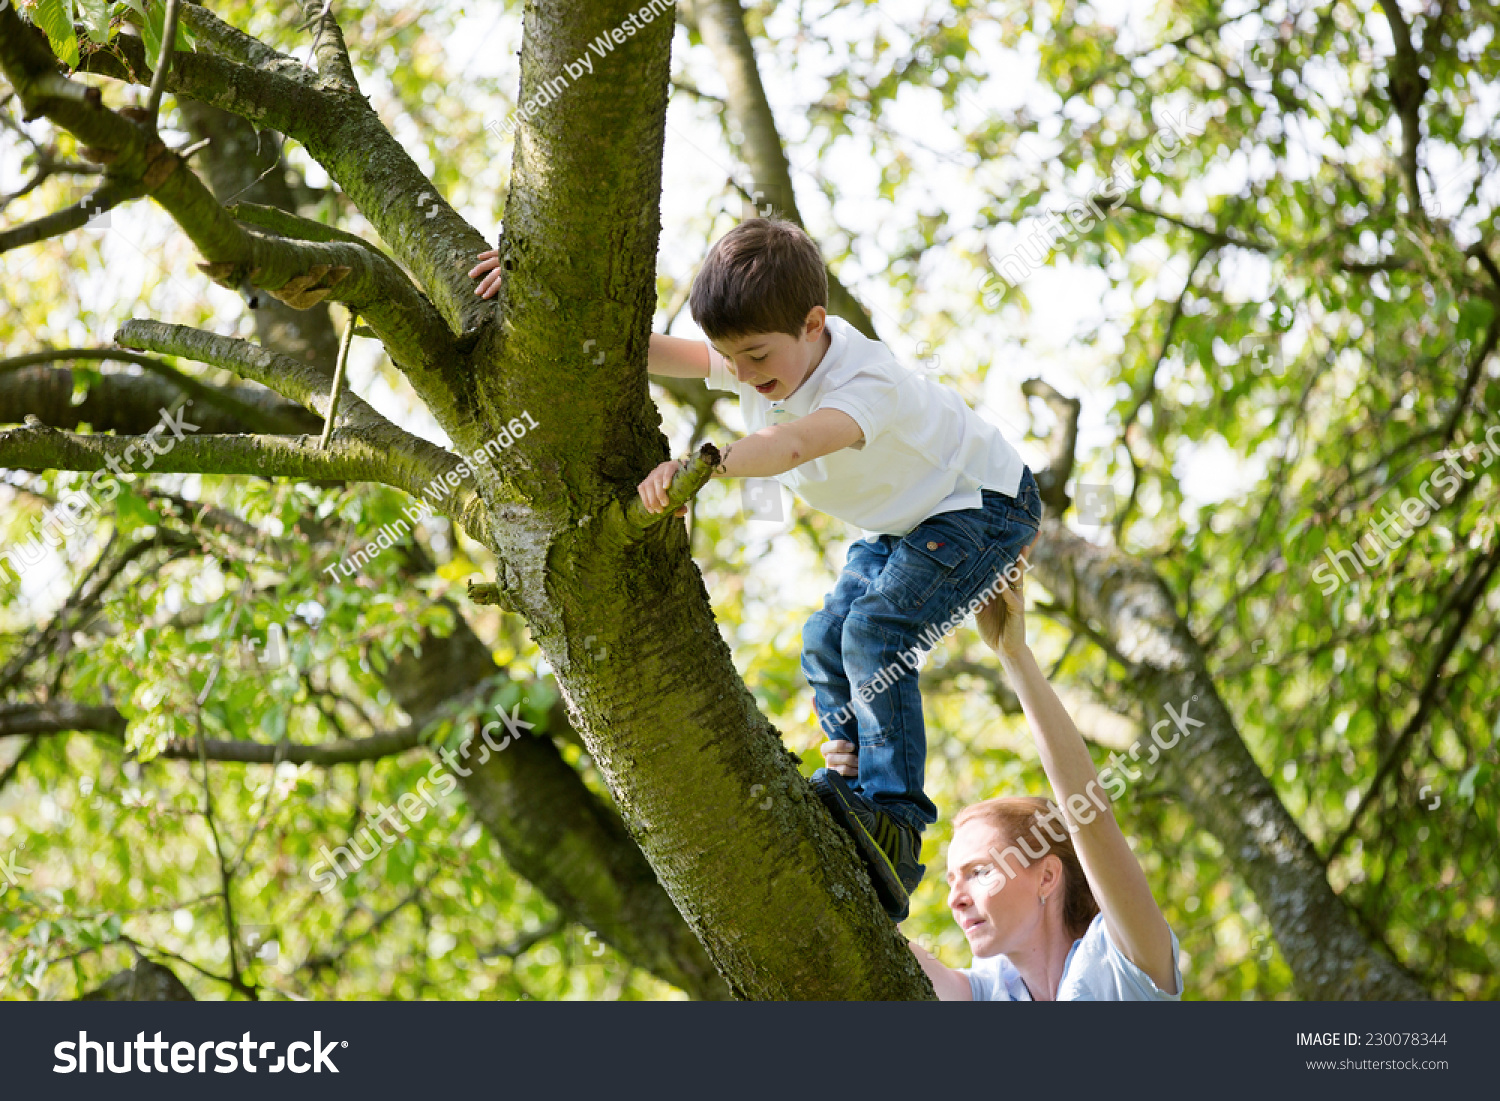 Can you climb a tree. Мальчик на дереве. Дерево для детей. Взбираться на дерево. Дети лазят по деревьям.